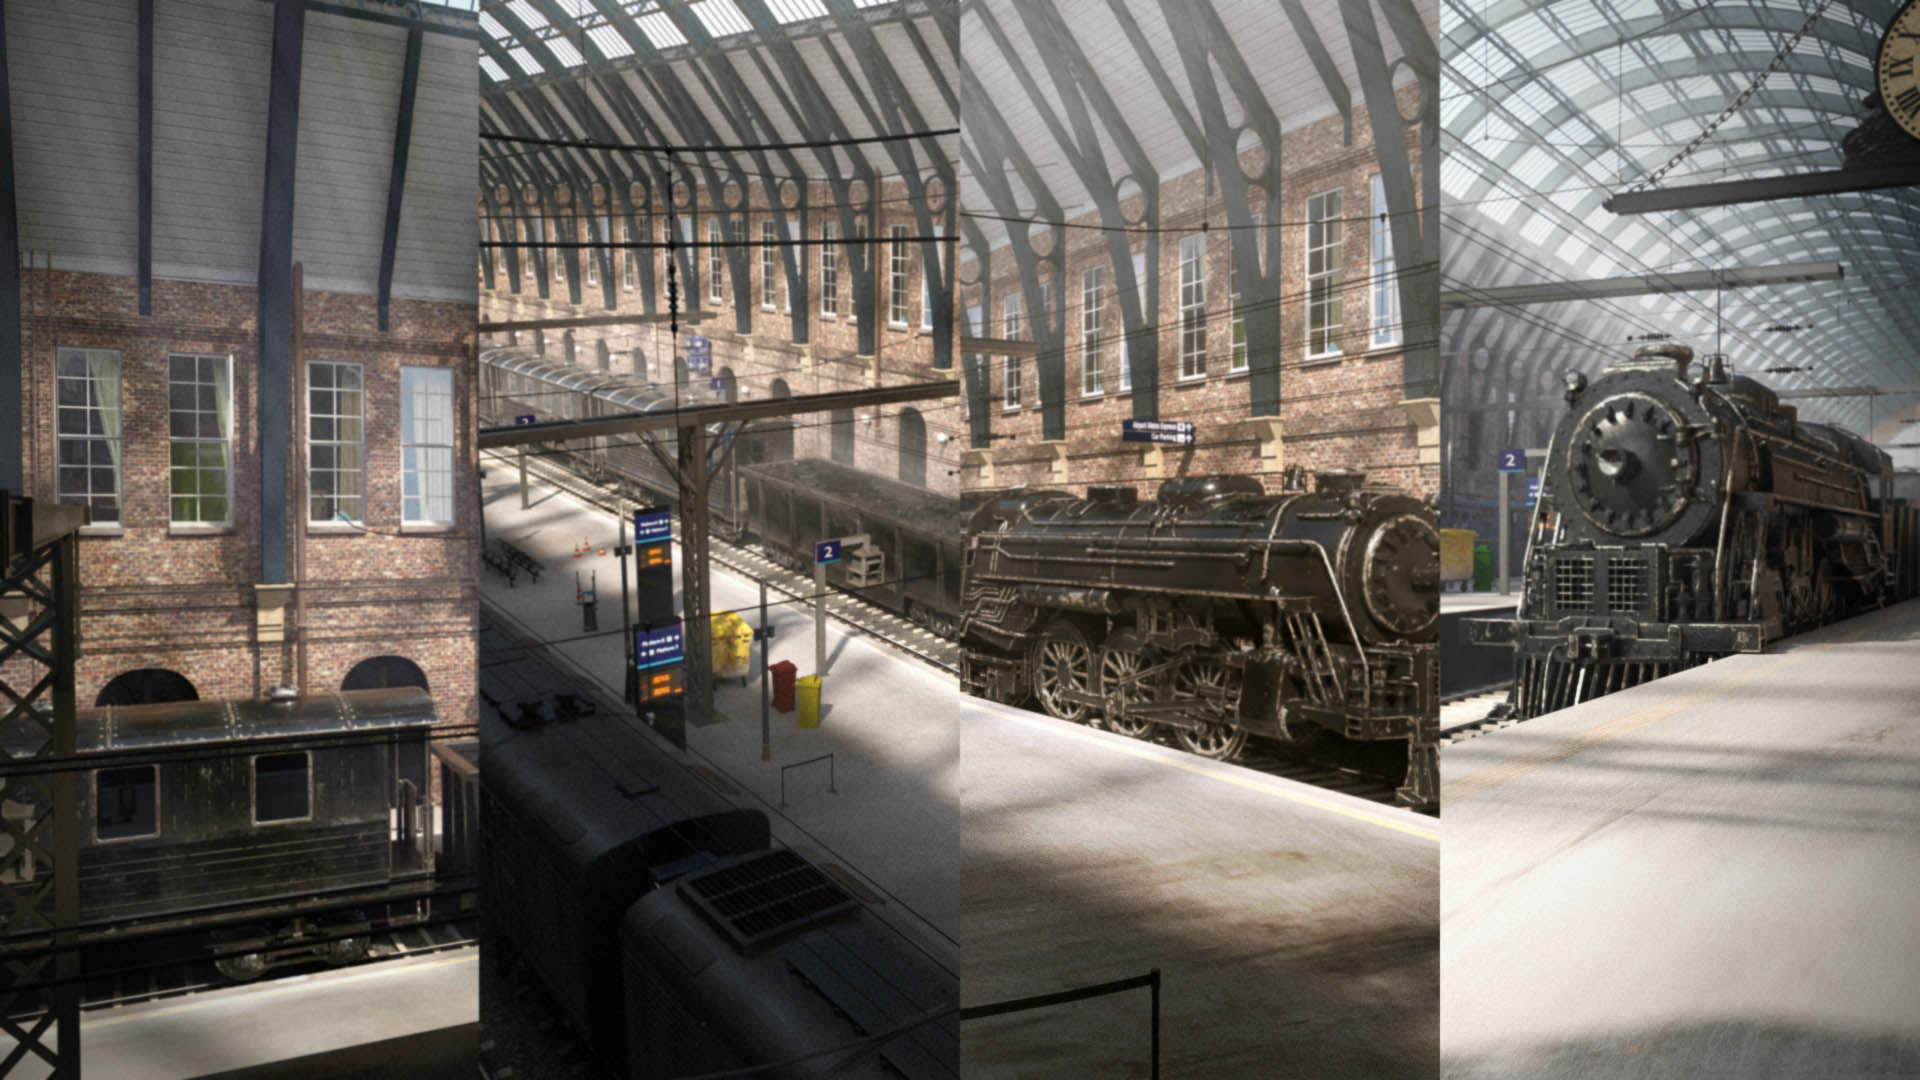 railway station 3d model in maya, render in arnold